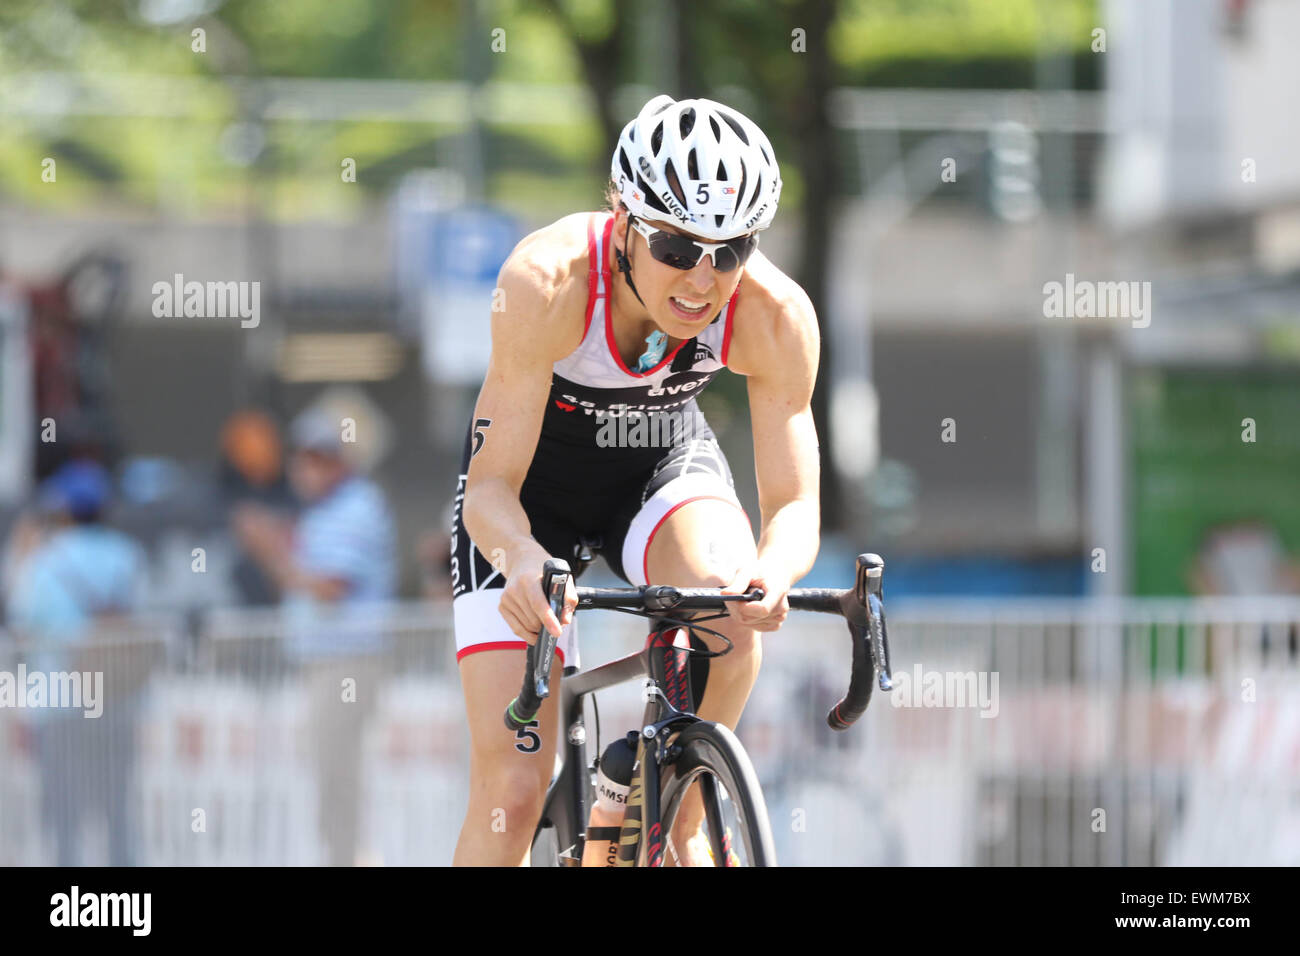 28.06.2015. D&#xfc;sseldorf, Germany. T3 Triathlon D&#xfc;sseldorf. Womens U23 Elite race. 5 Anne Haug Stock Photo